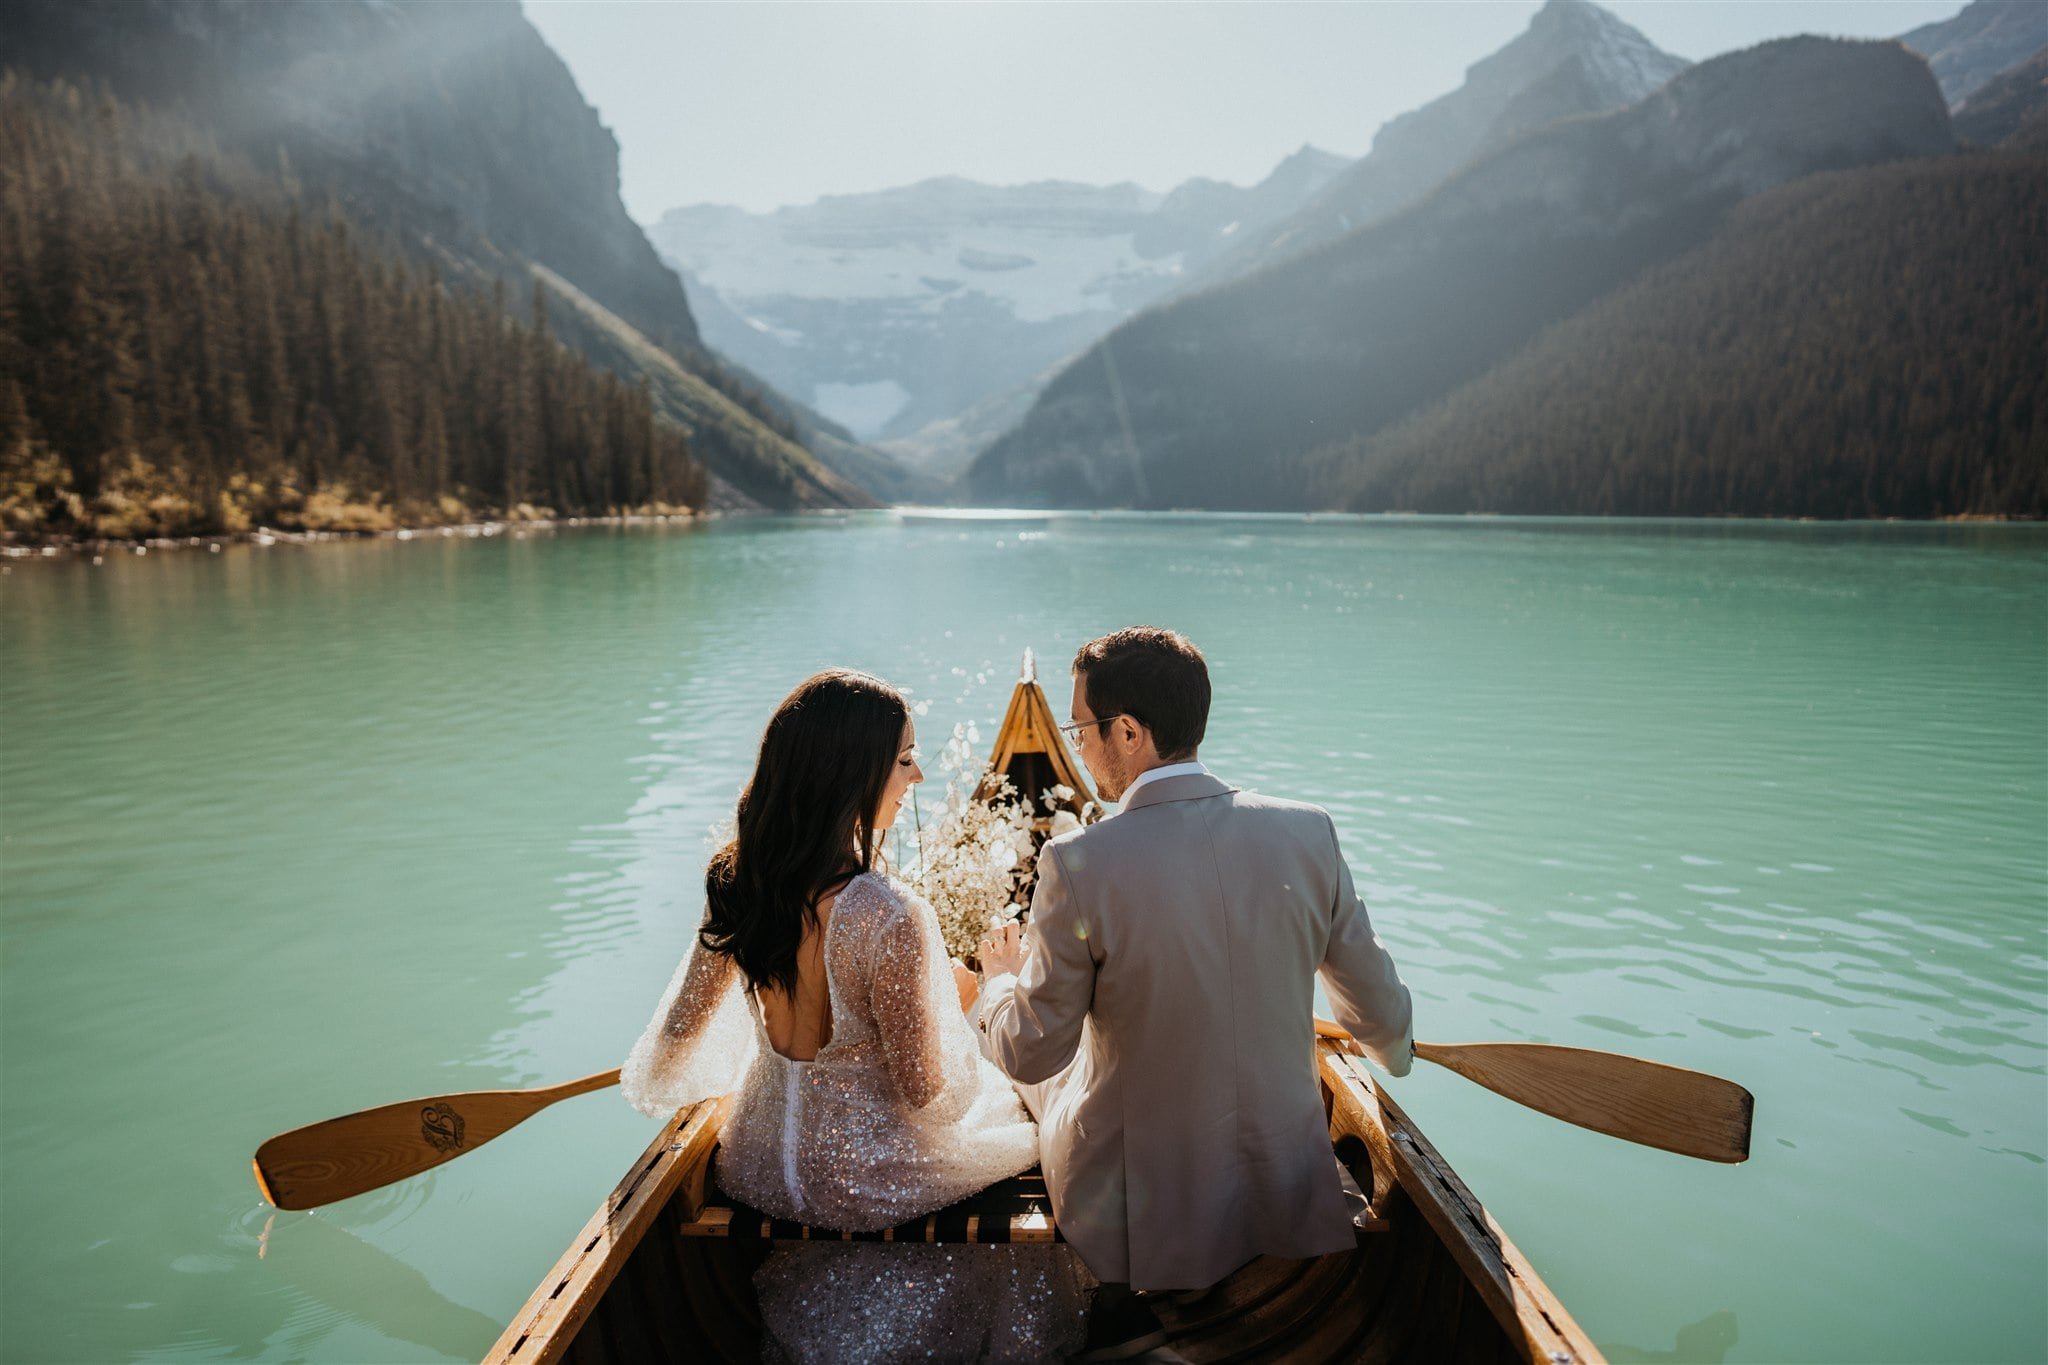 Canoe adventure elopement photos in Alberta, Canada